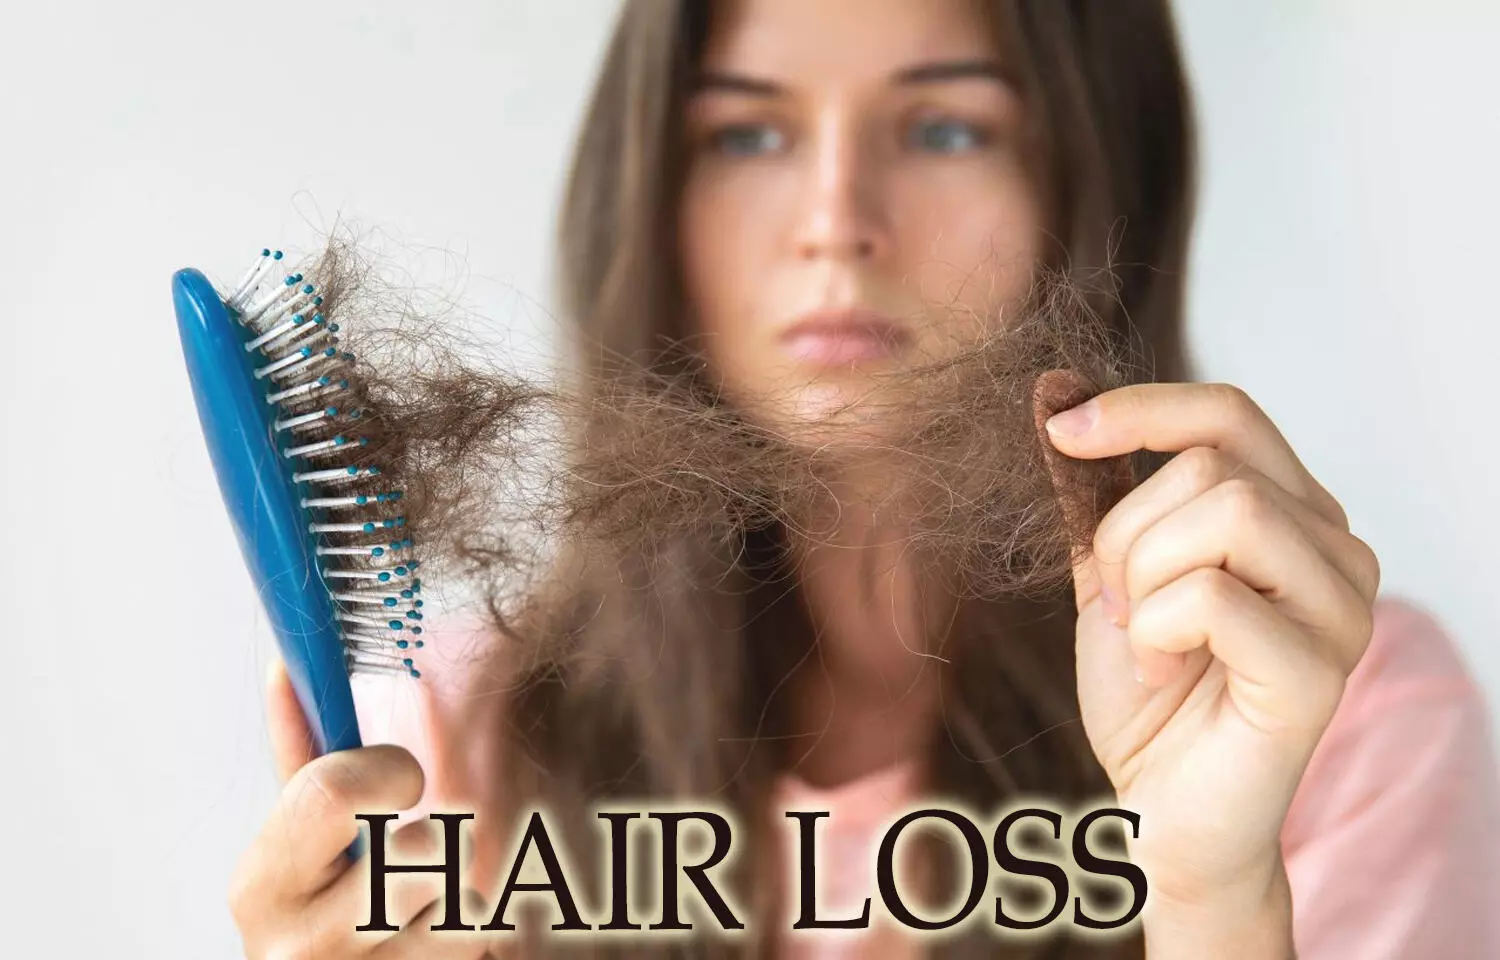 More than half of postmenopausal women experience female pattern hair loss